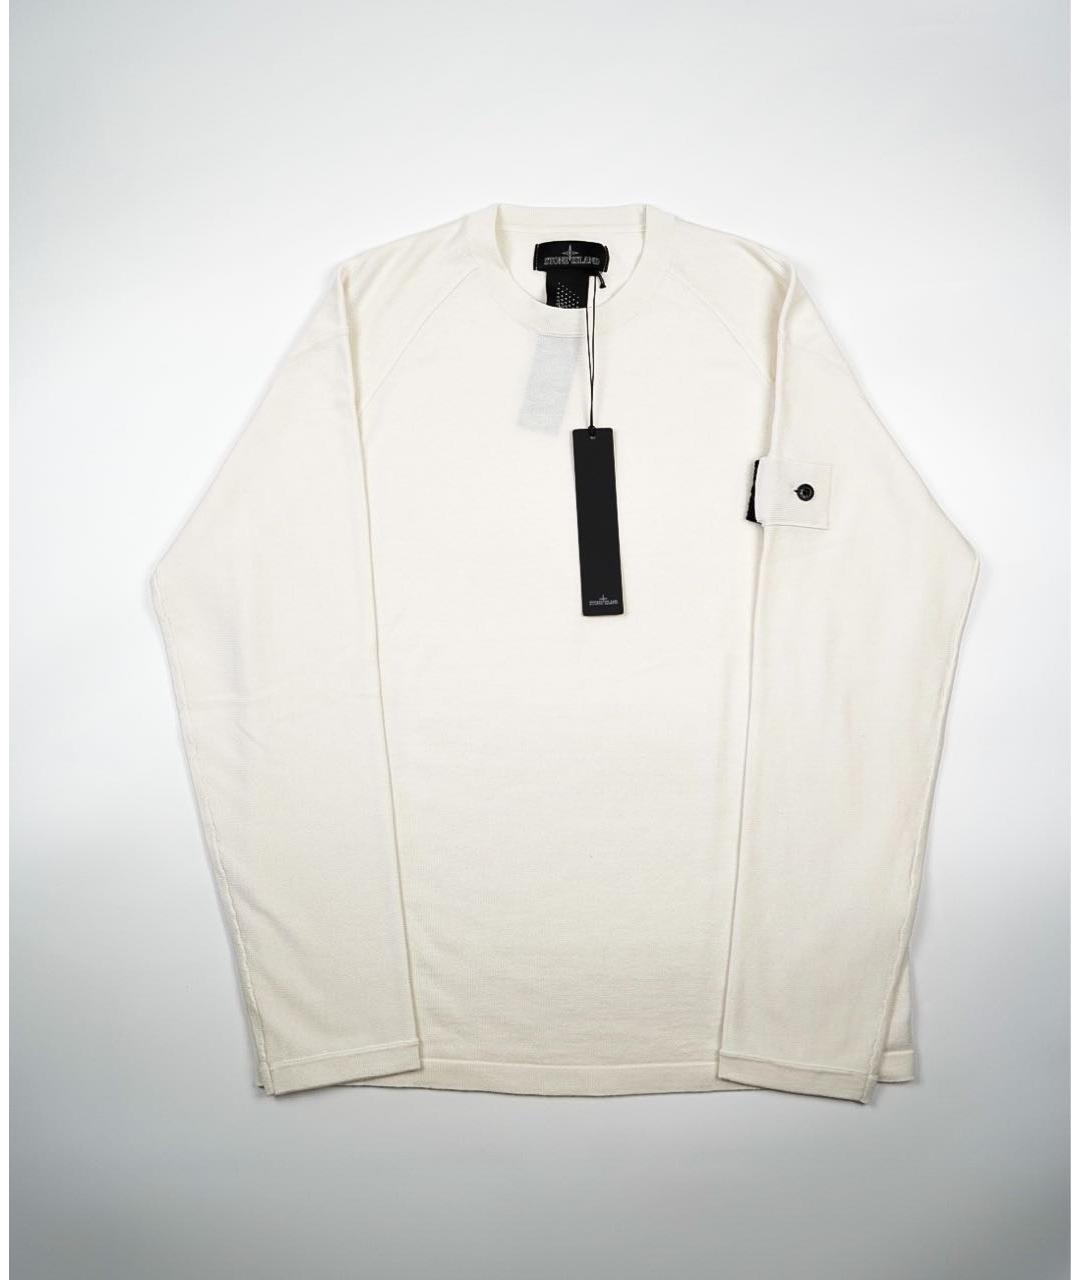 STONE ISLAND SHADOW PROJECT Белый хлопковый джемпер / свитер, фото 5